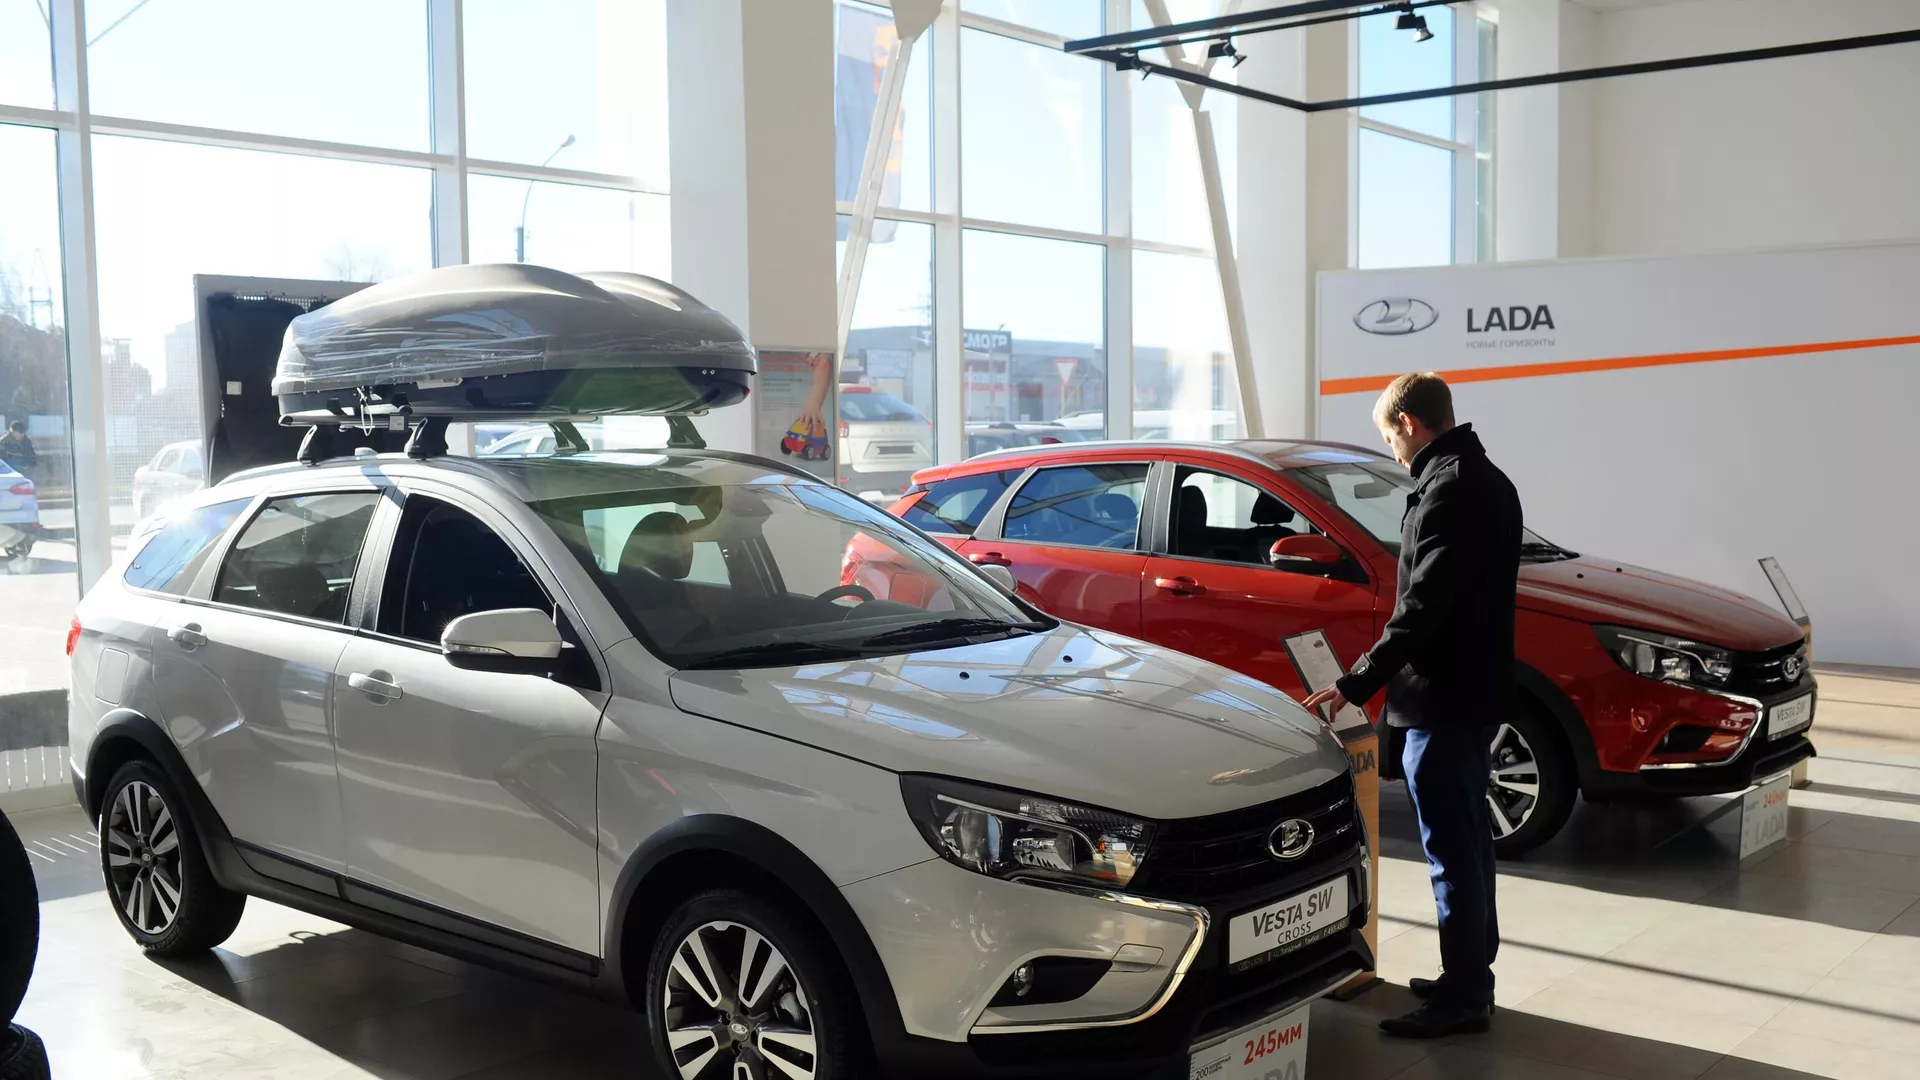 Подробнее о "АВТОВАЗ запустил проект онлайн-продаж автомобилей LADA по заводским ценам"